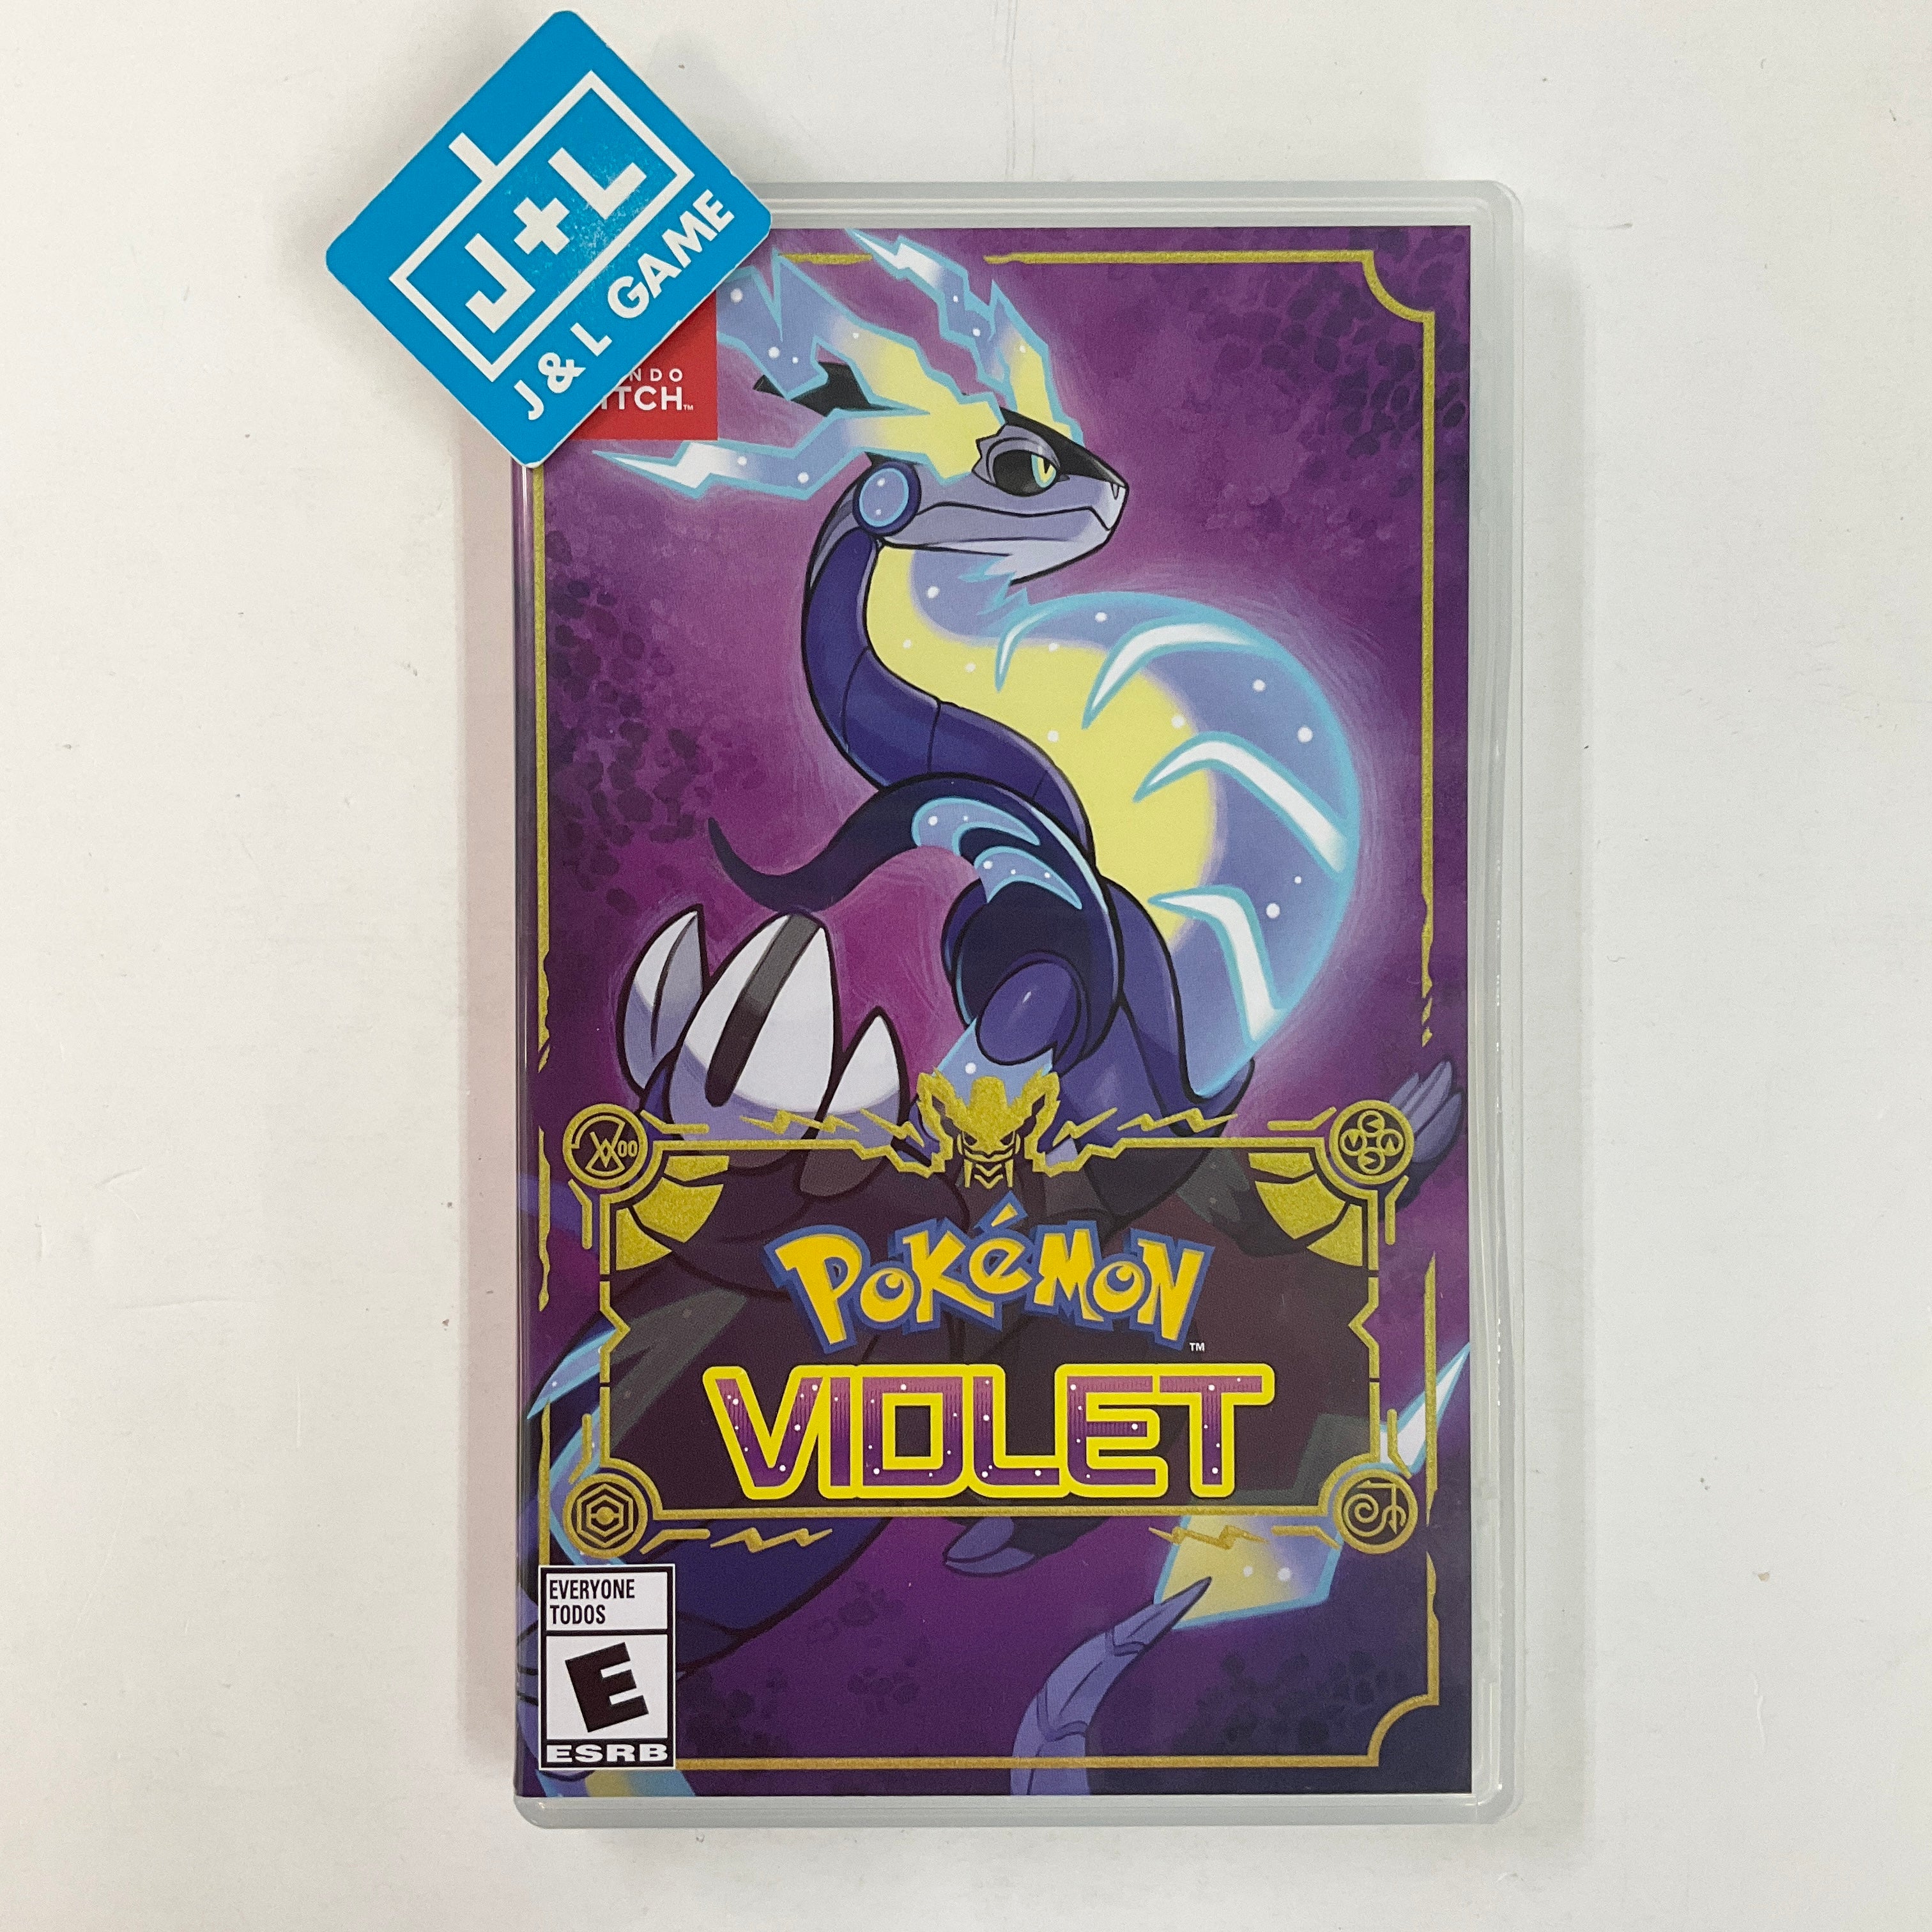 Pokémon Scarlet & Pokémon Violet Double Pack (World Edition) - (NSW) Nintendo Switch [Pre-Owned] Video Games Nintendo   